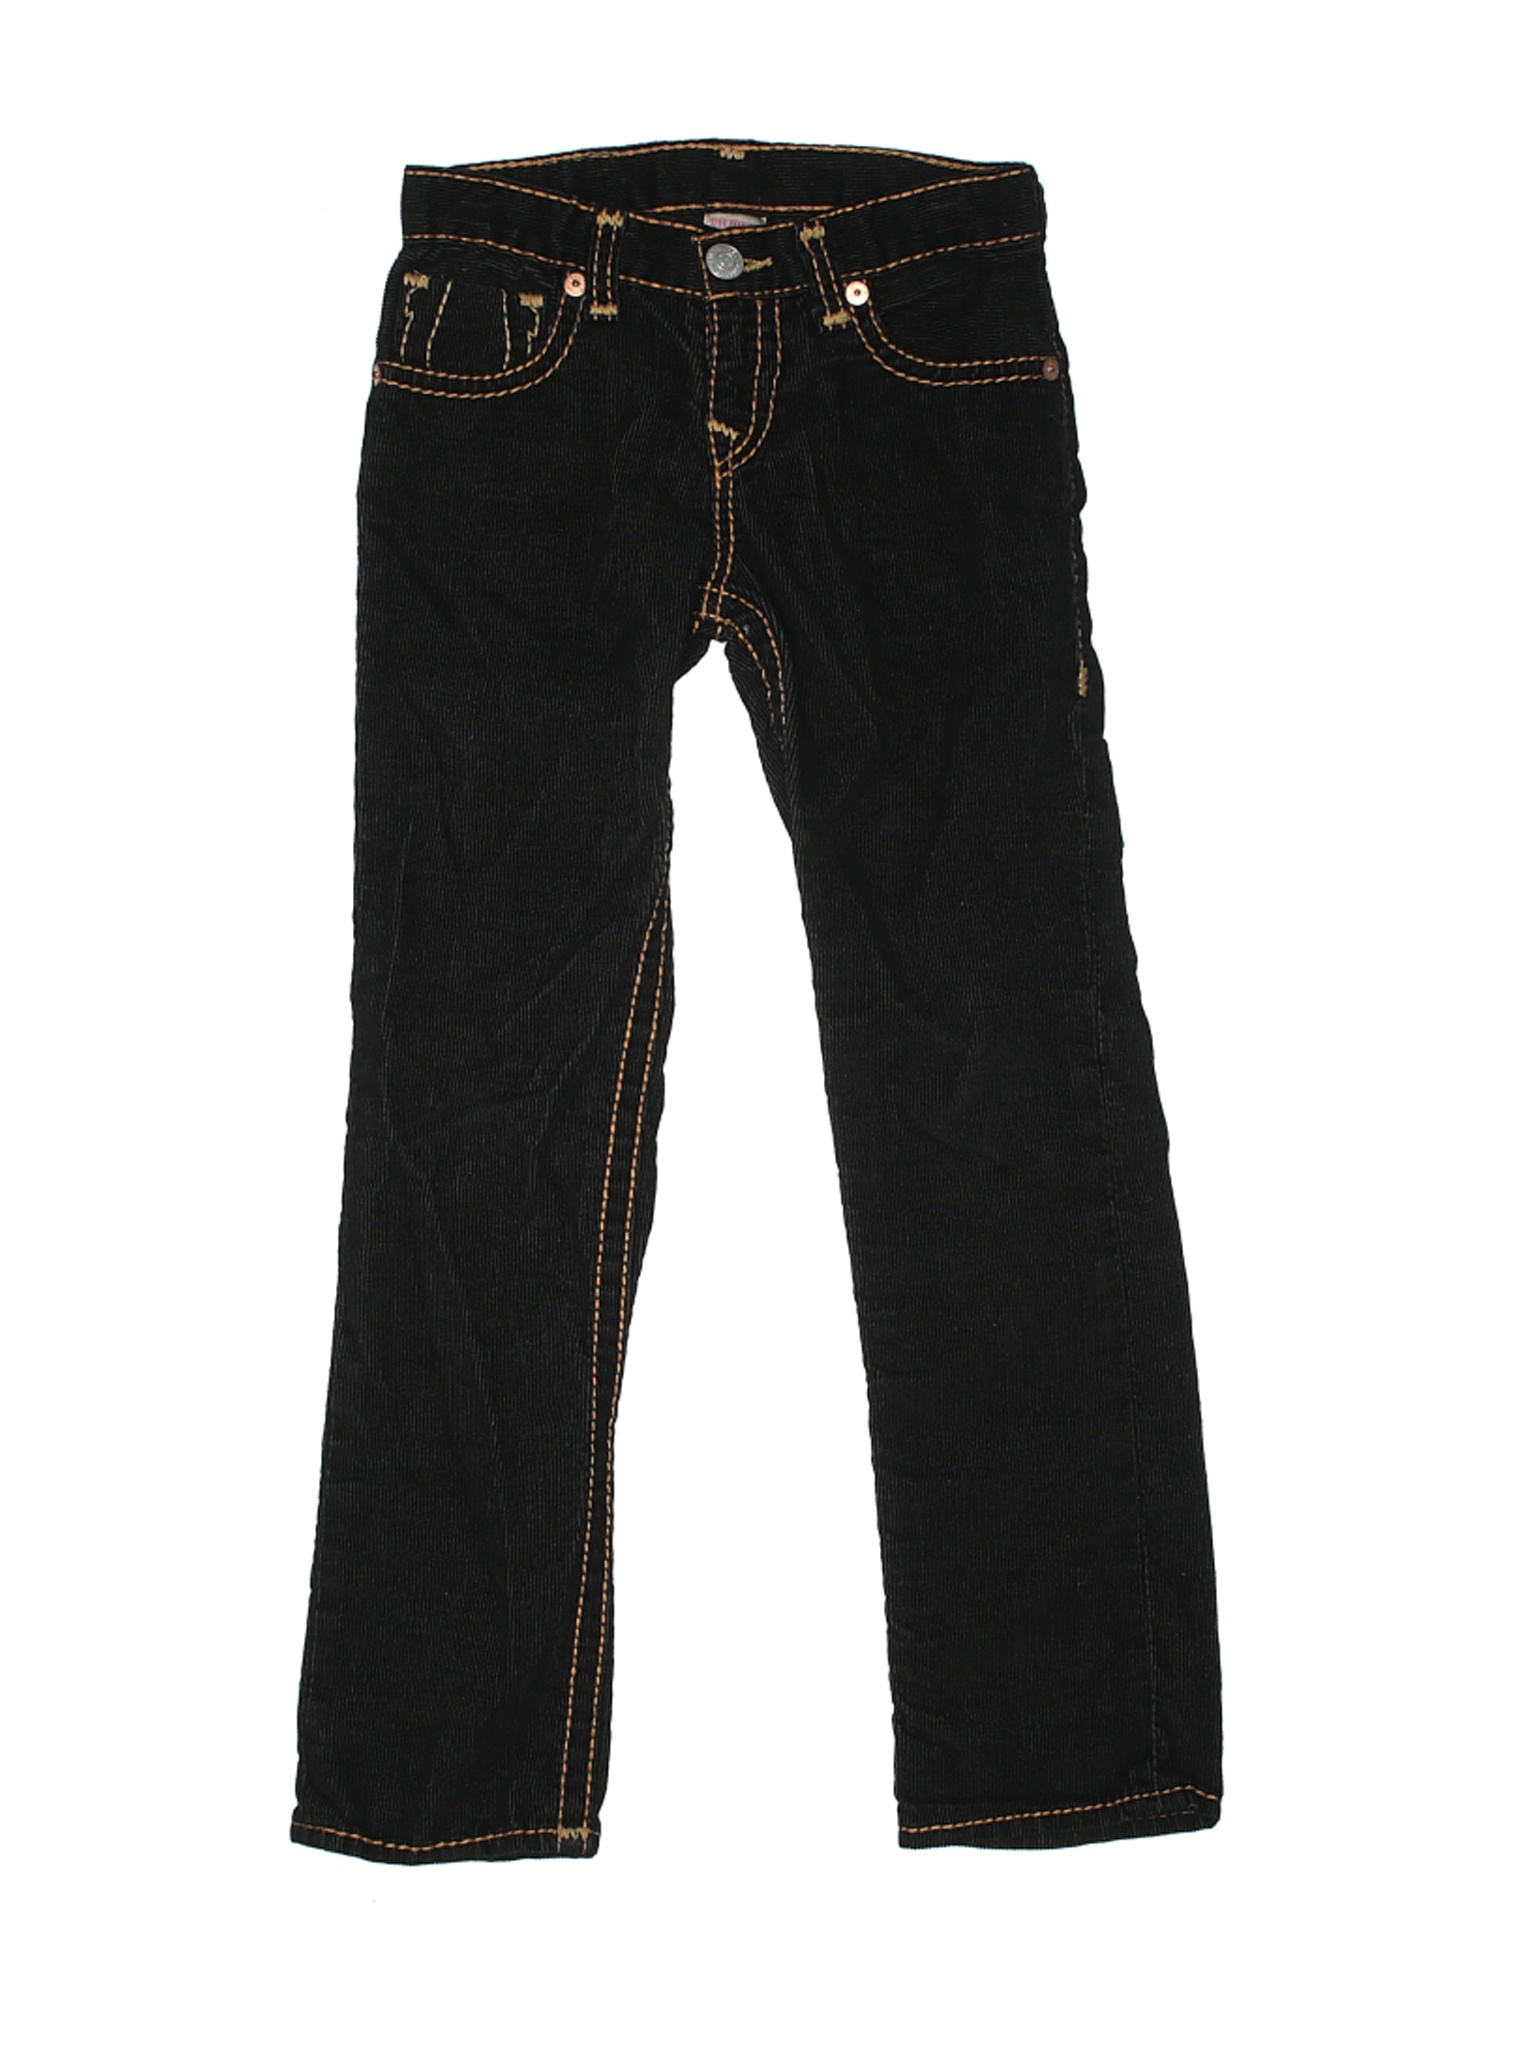 True Religion Girls Black Jeans 8 Ebay